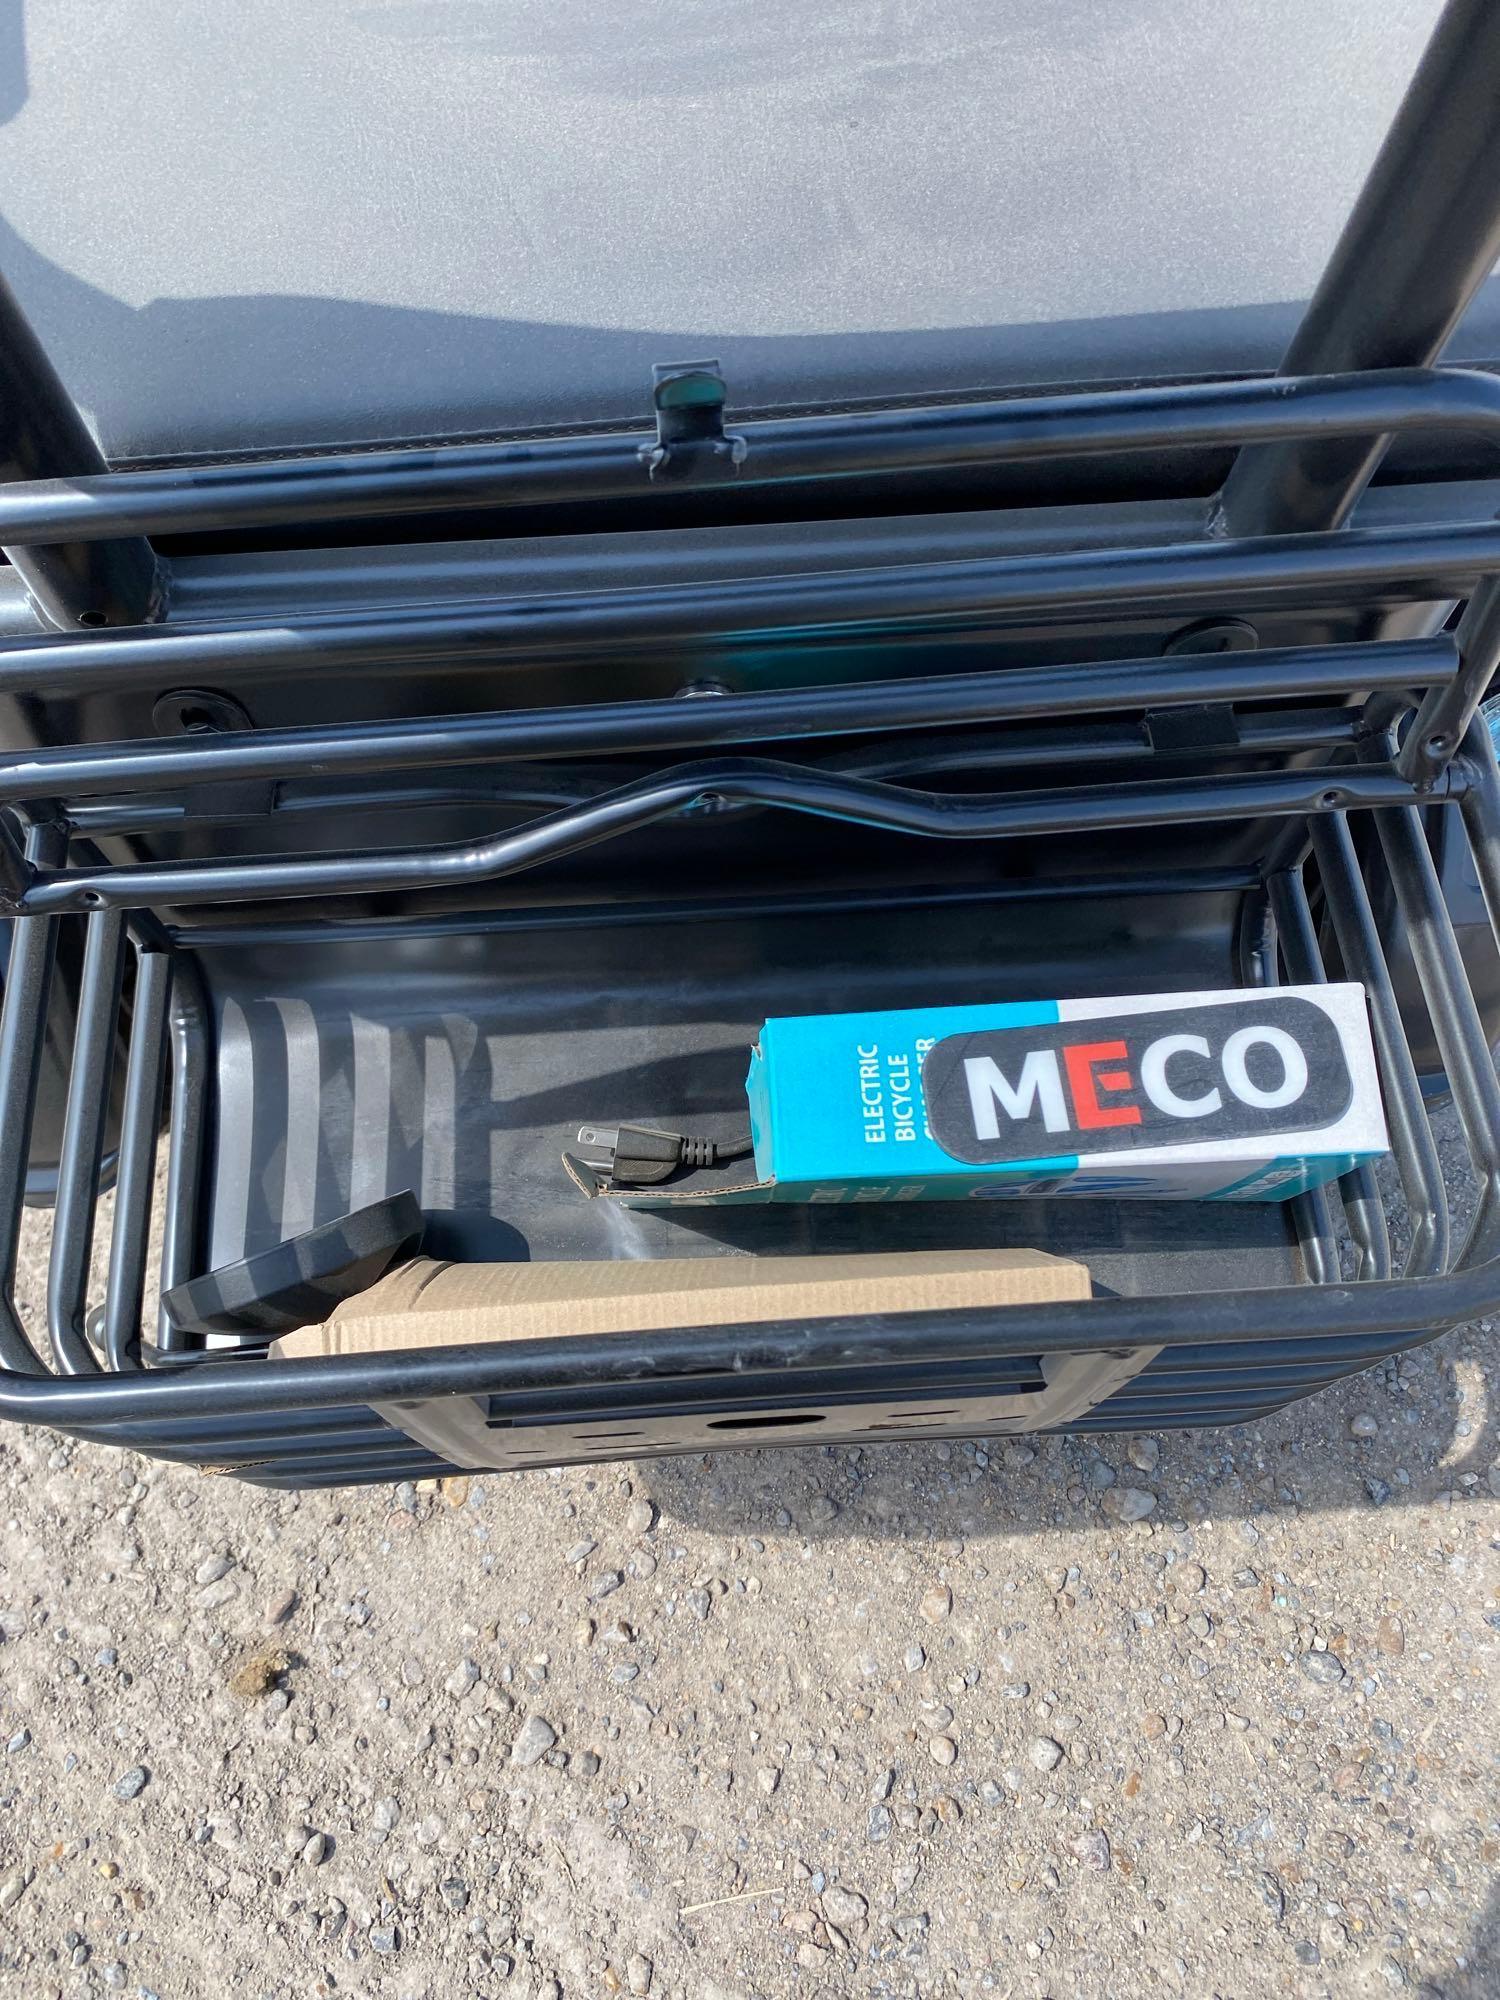 2024 Unused MECO M3 - 3 Seat Electric Cart